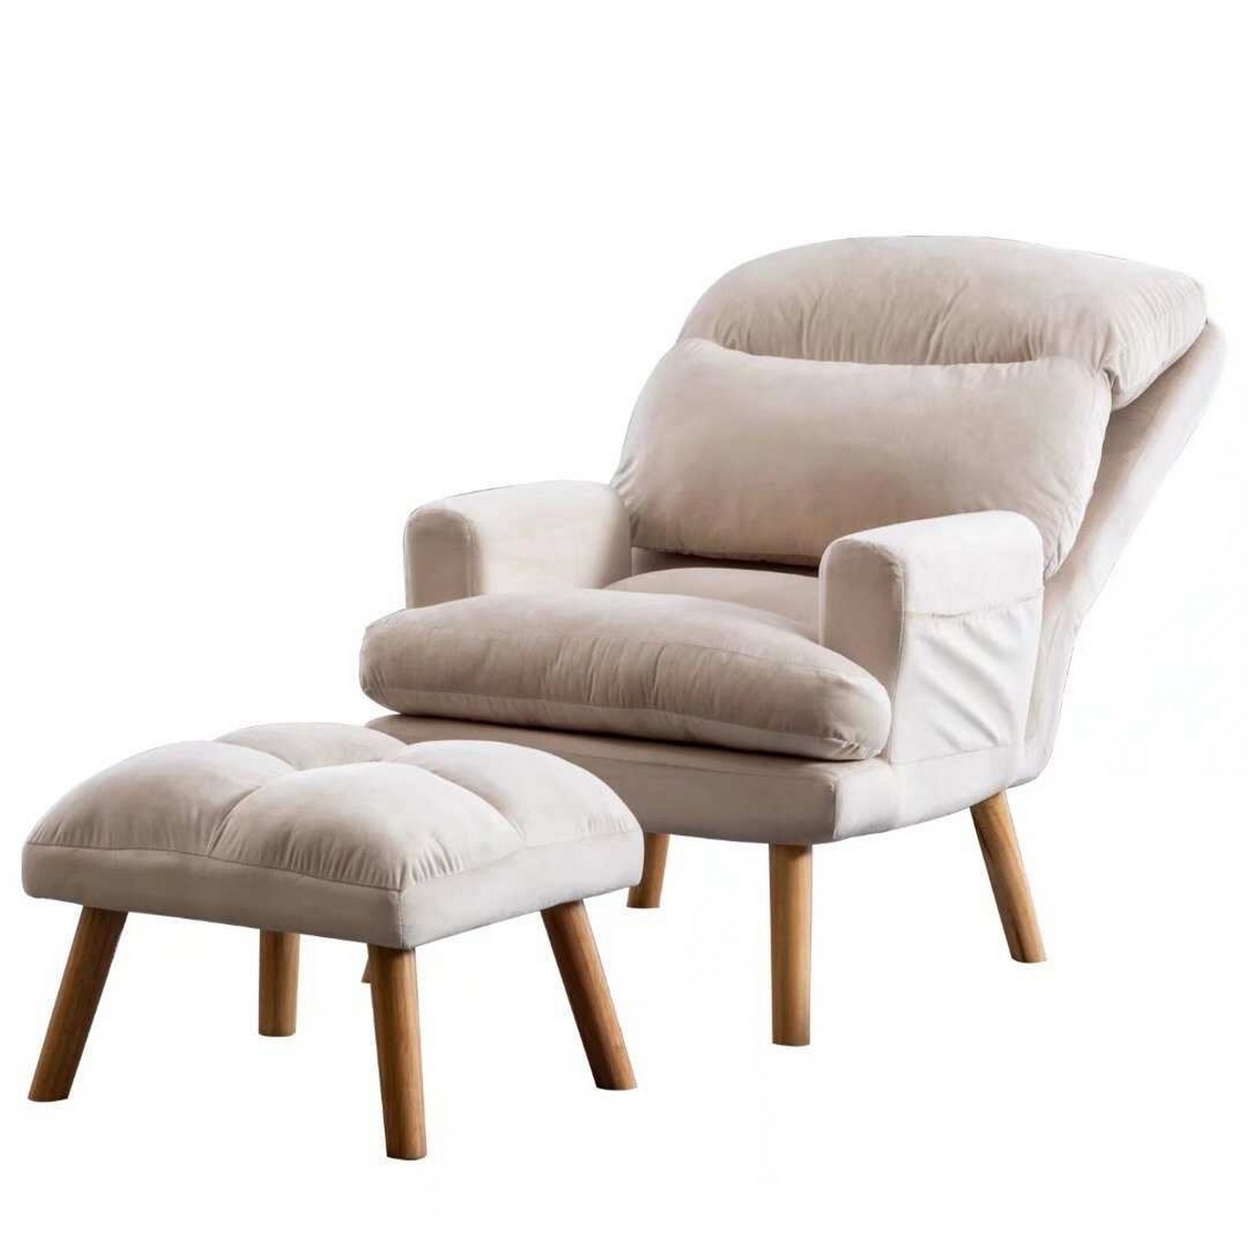 Nina 28 Inch 2 Piece Accent Chair And Ottoman Set, Splayed Legs, Beige- Saltoro Sherpi